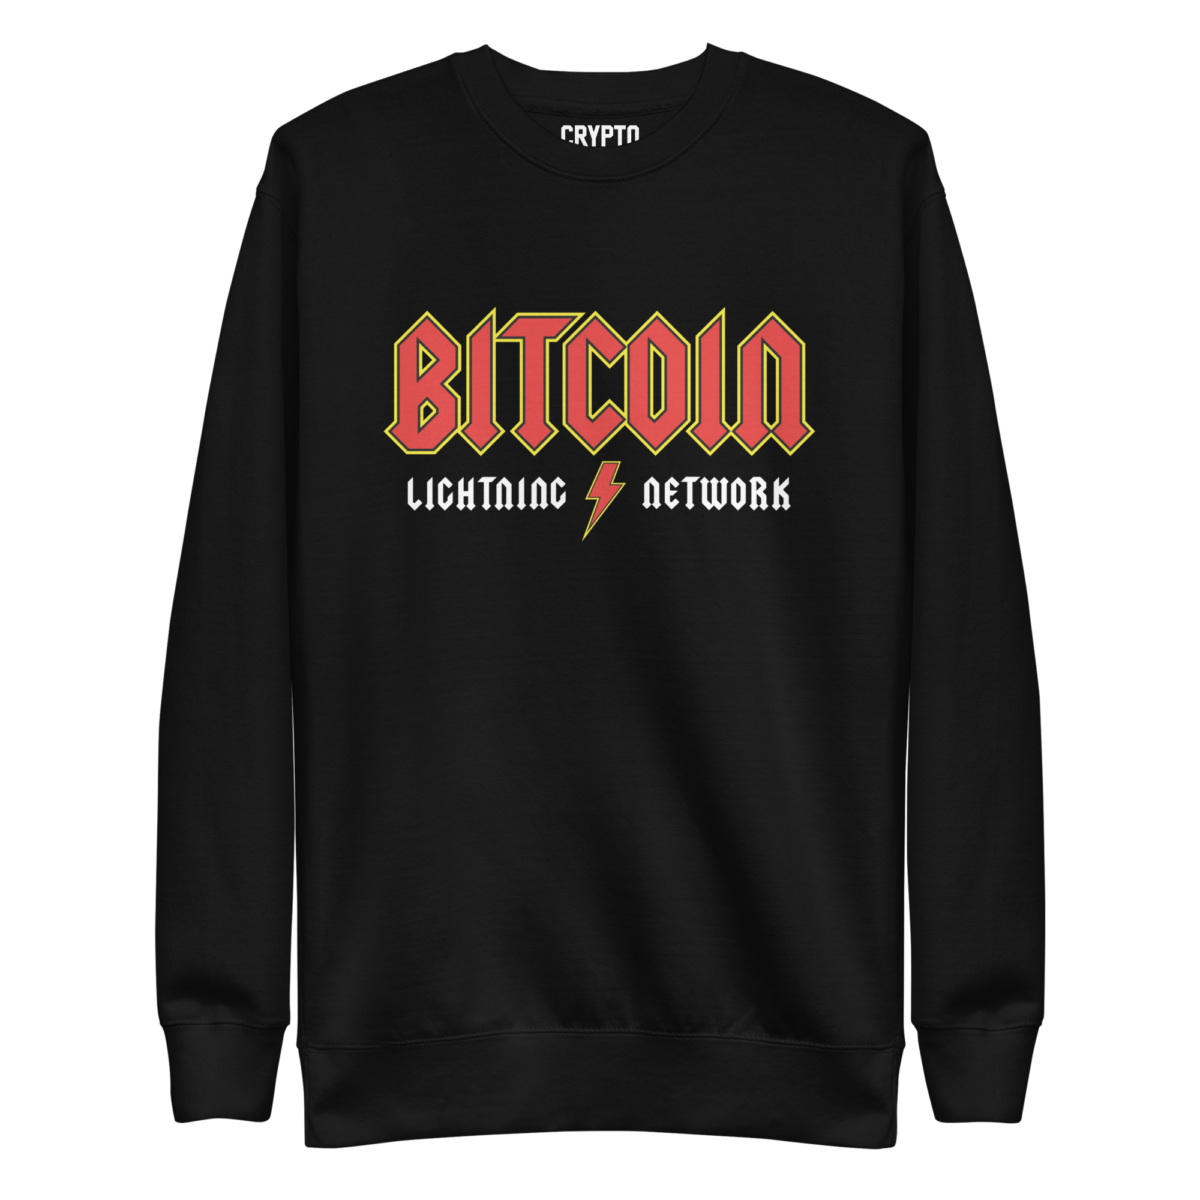 unisex premium sweatshirt black front 6330b21305ece - Bitcoin Lightning Network Sweatshirt